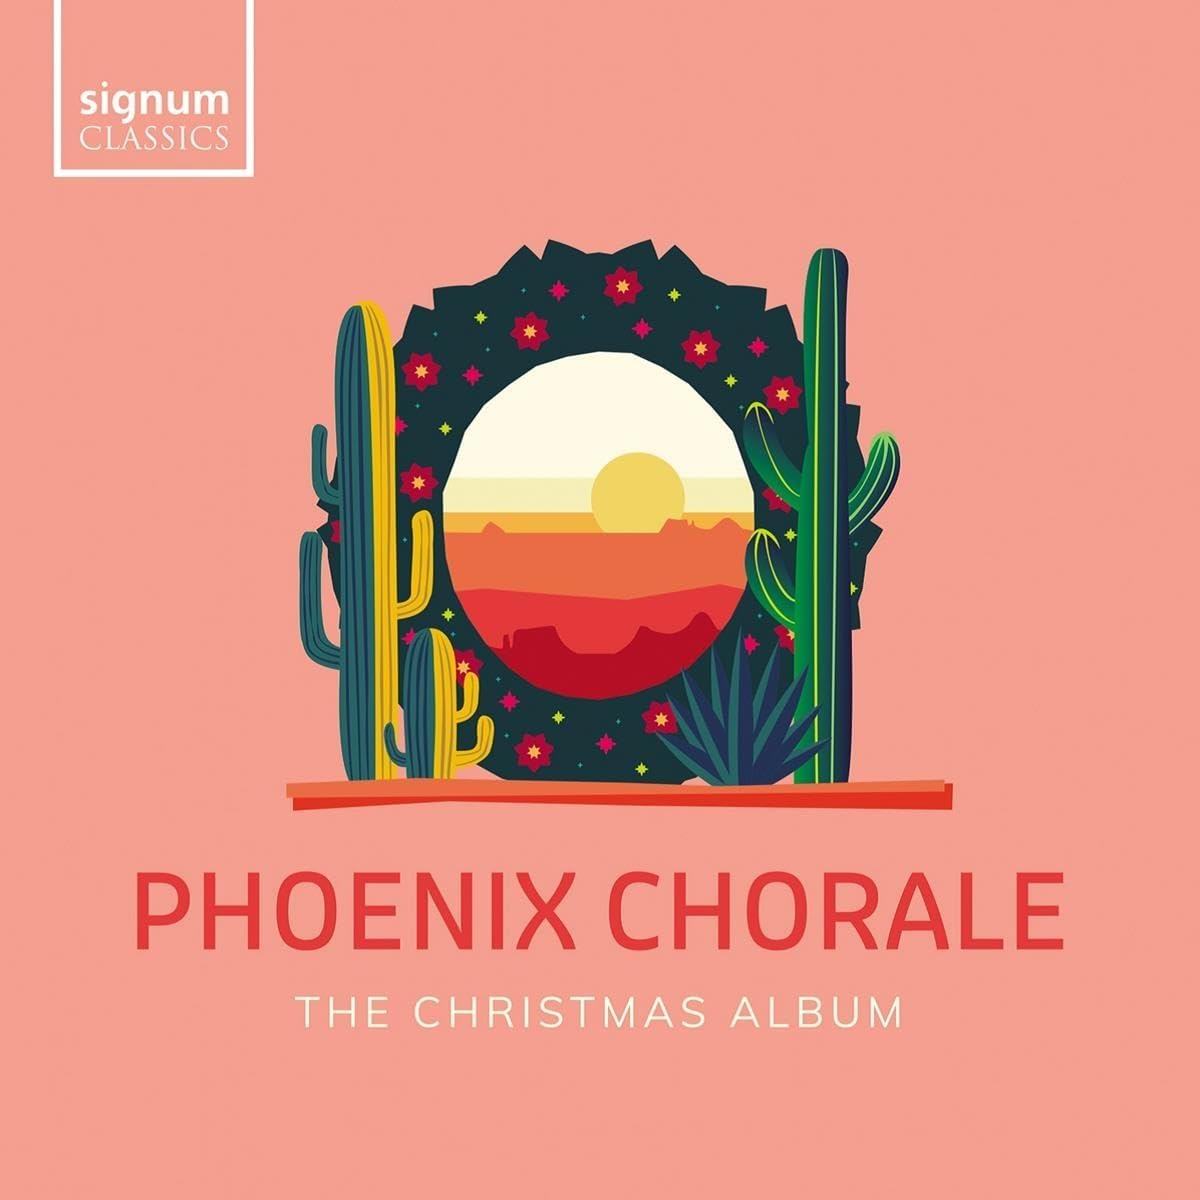 Phoenix chorale